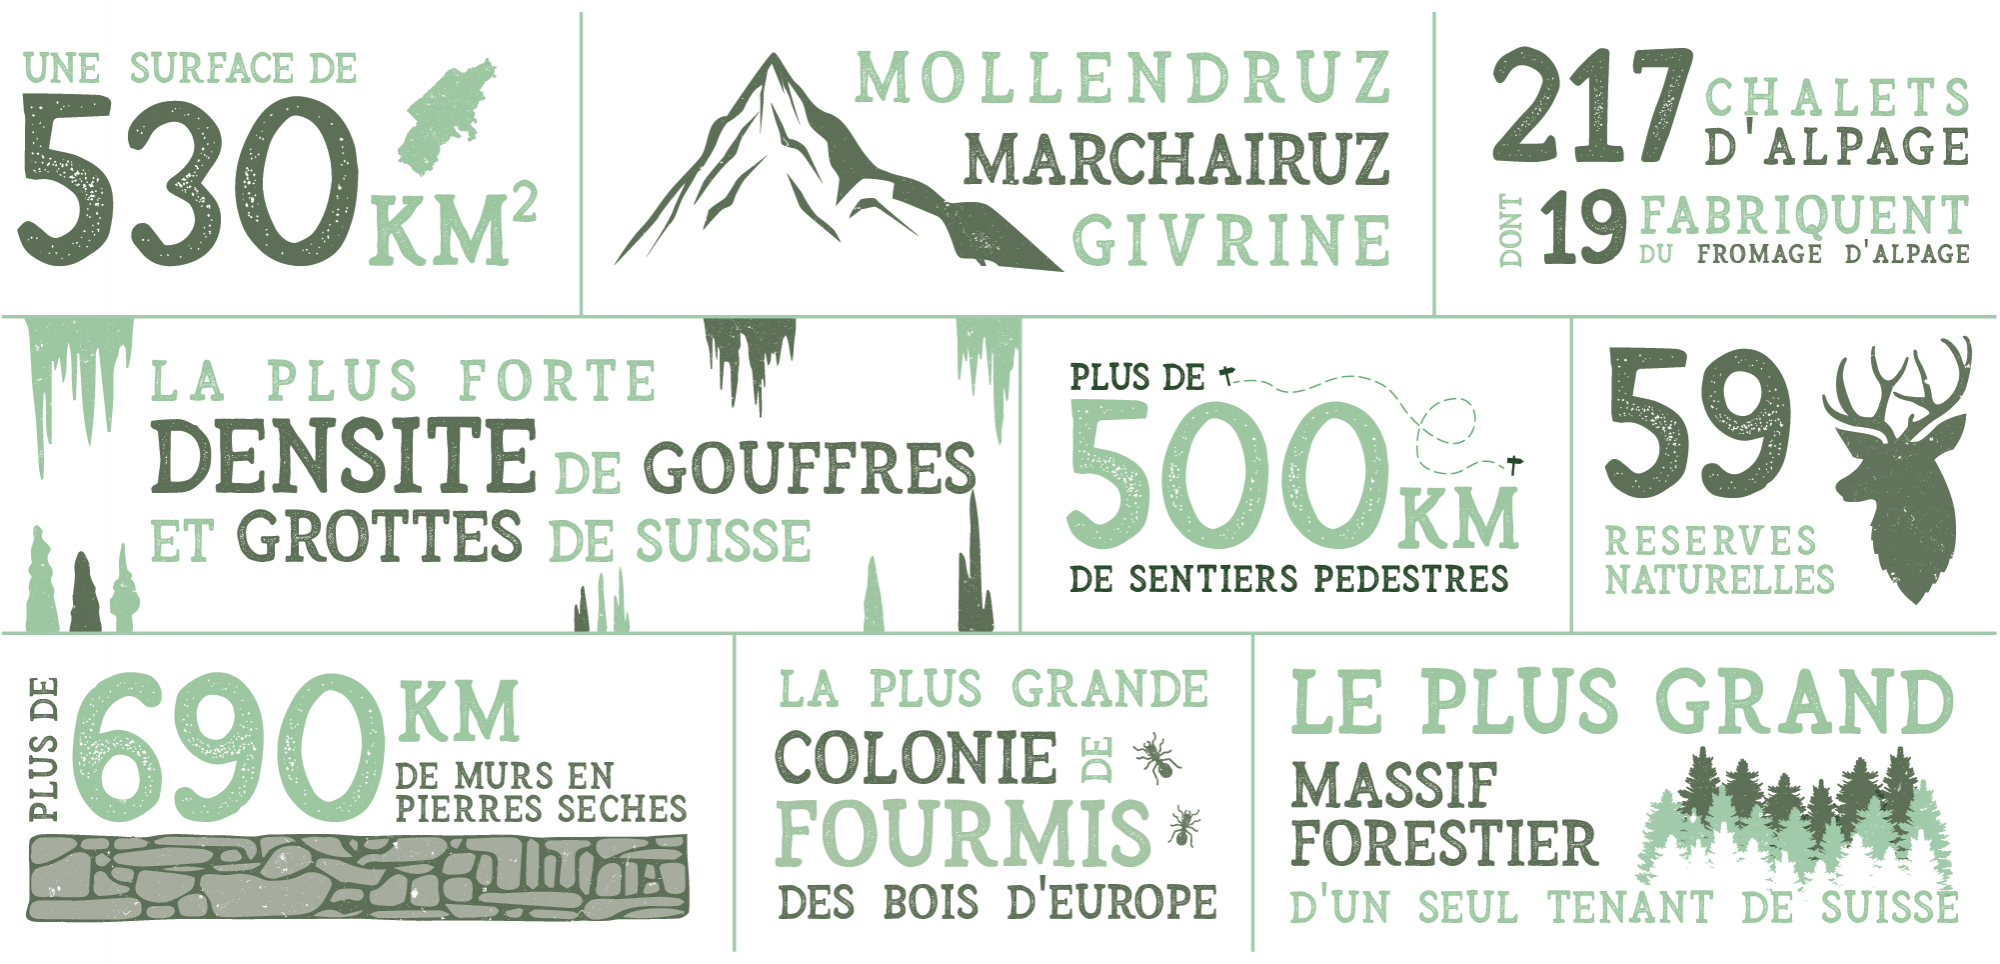 Infographie parc jura vaudois fr